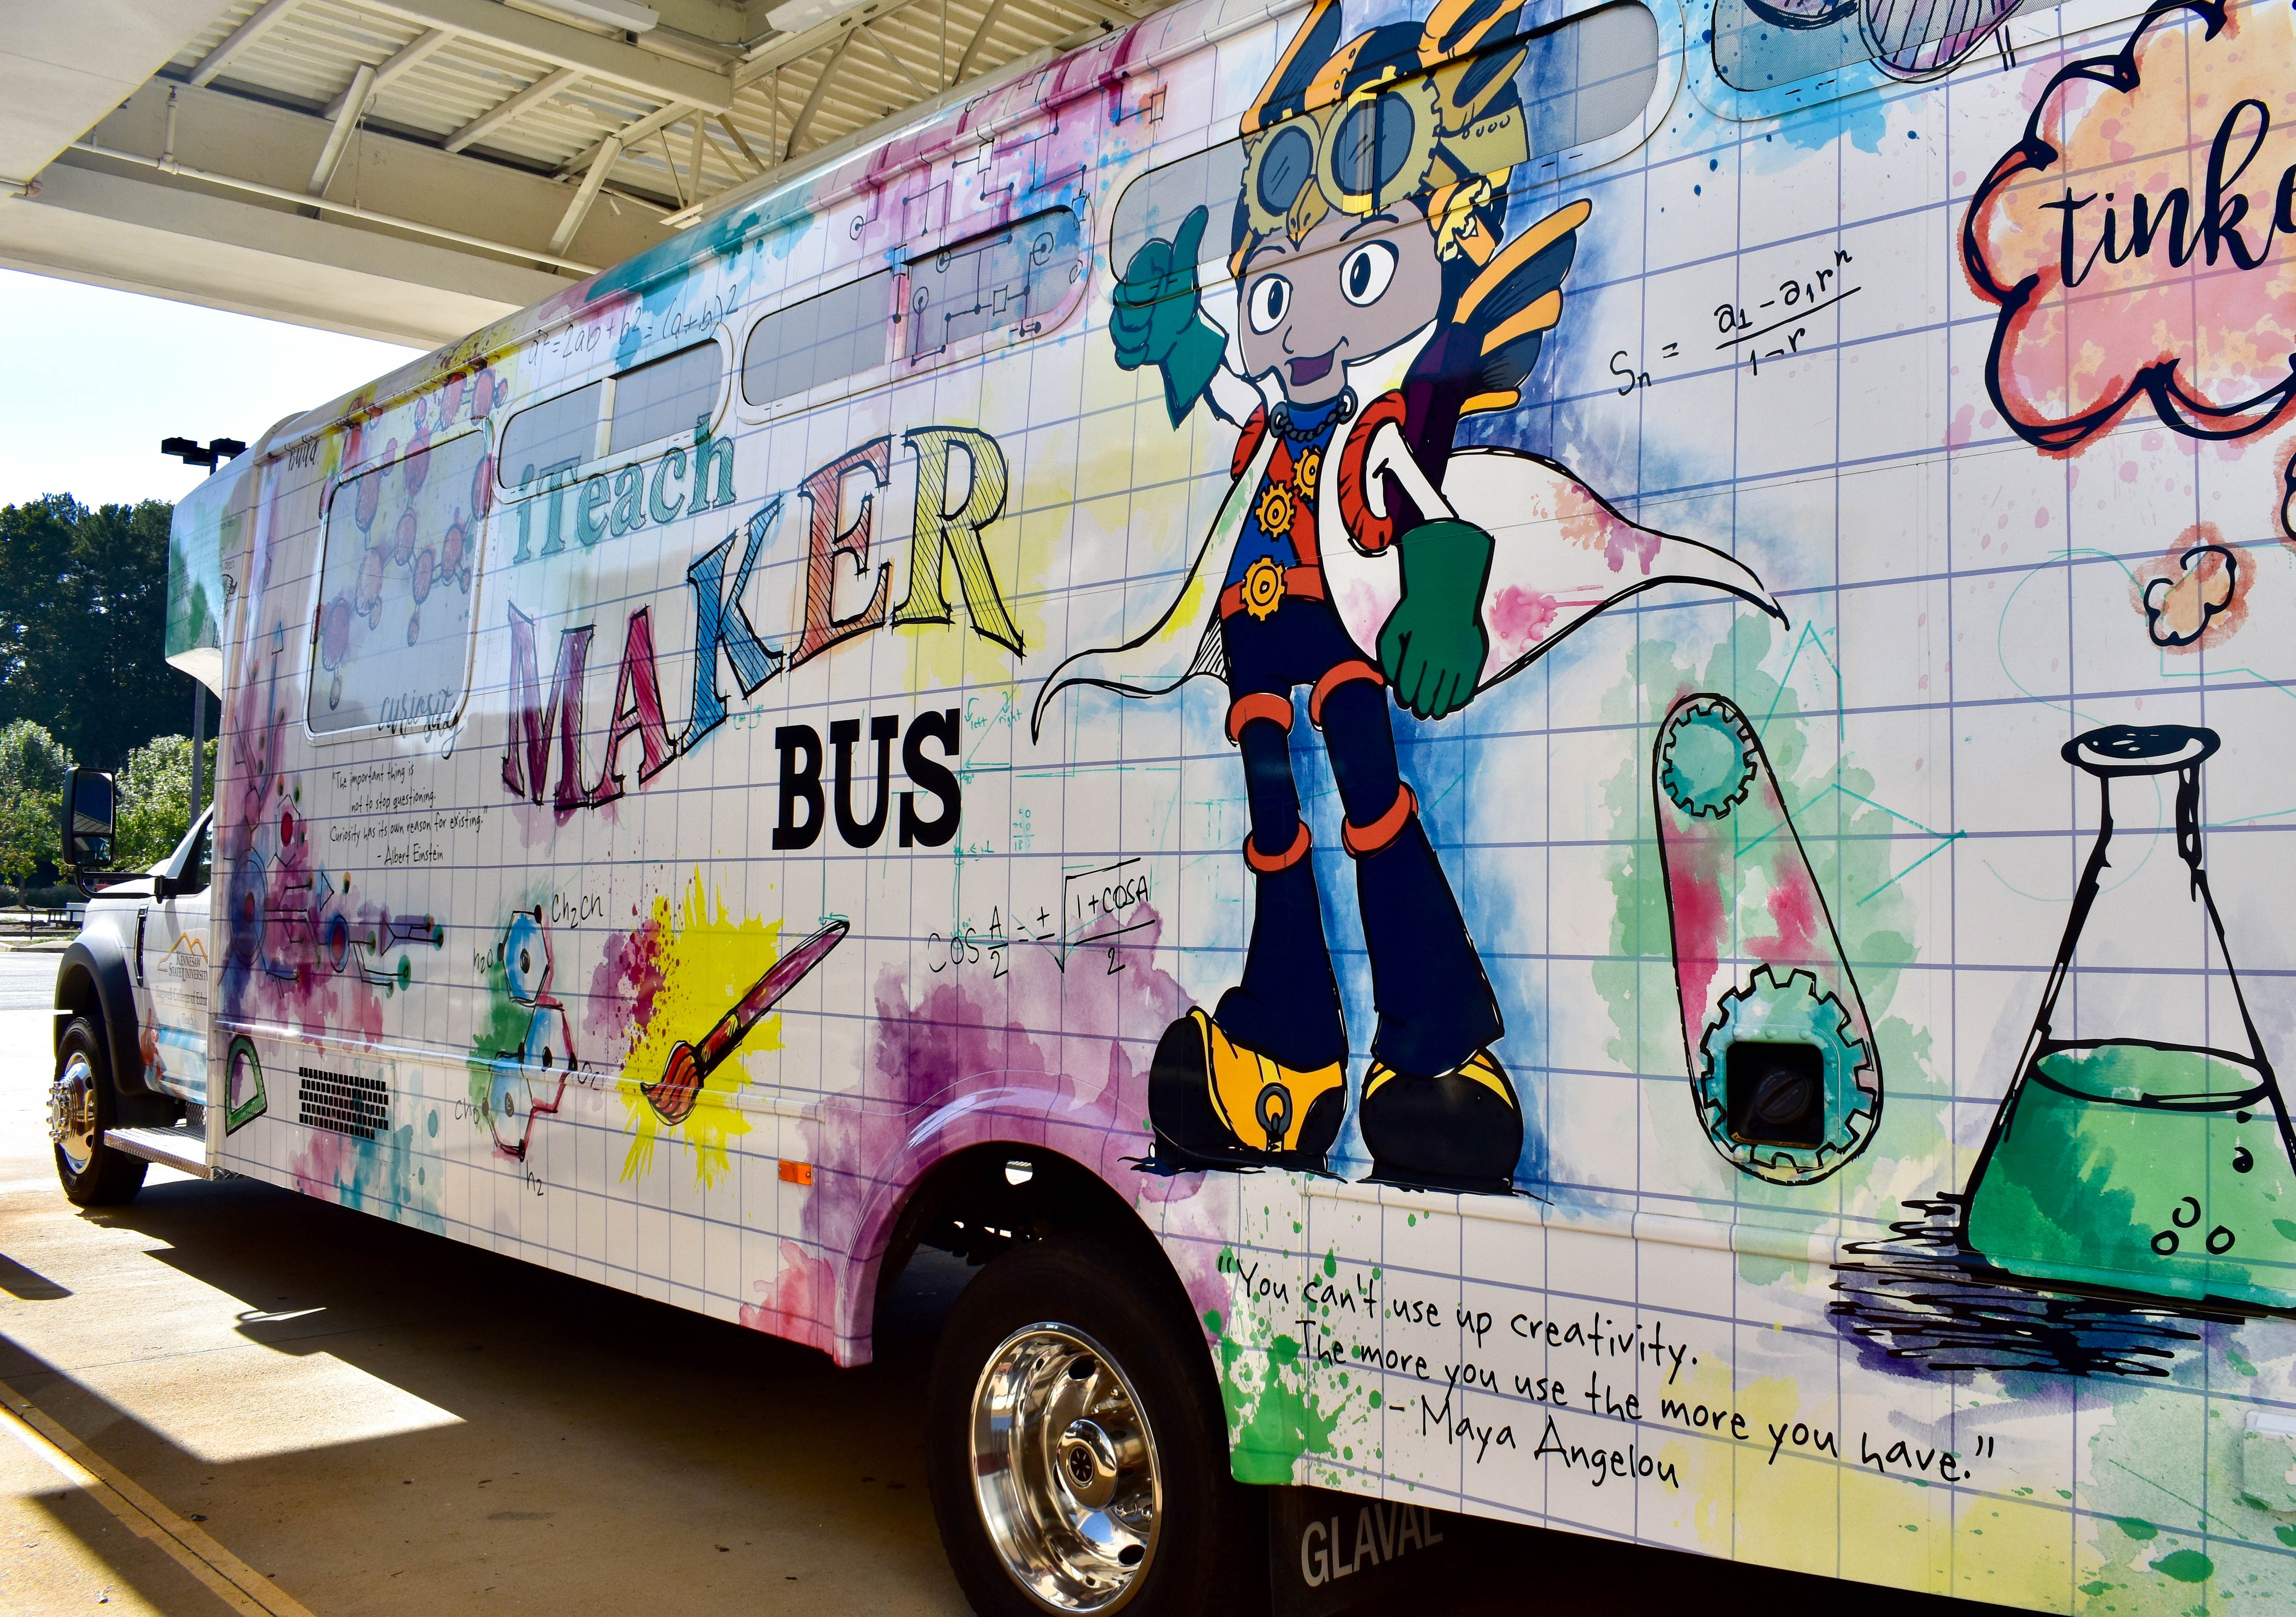 iTeach MakerBus continues its tour